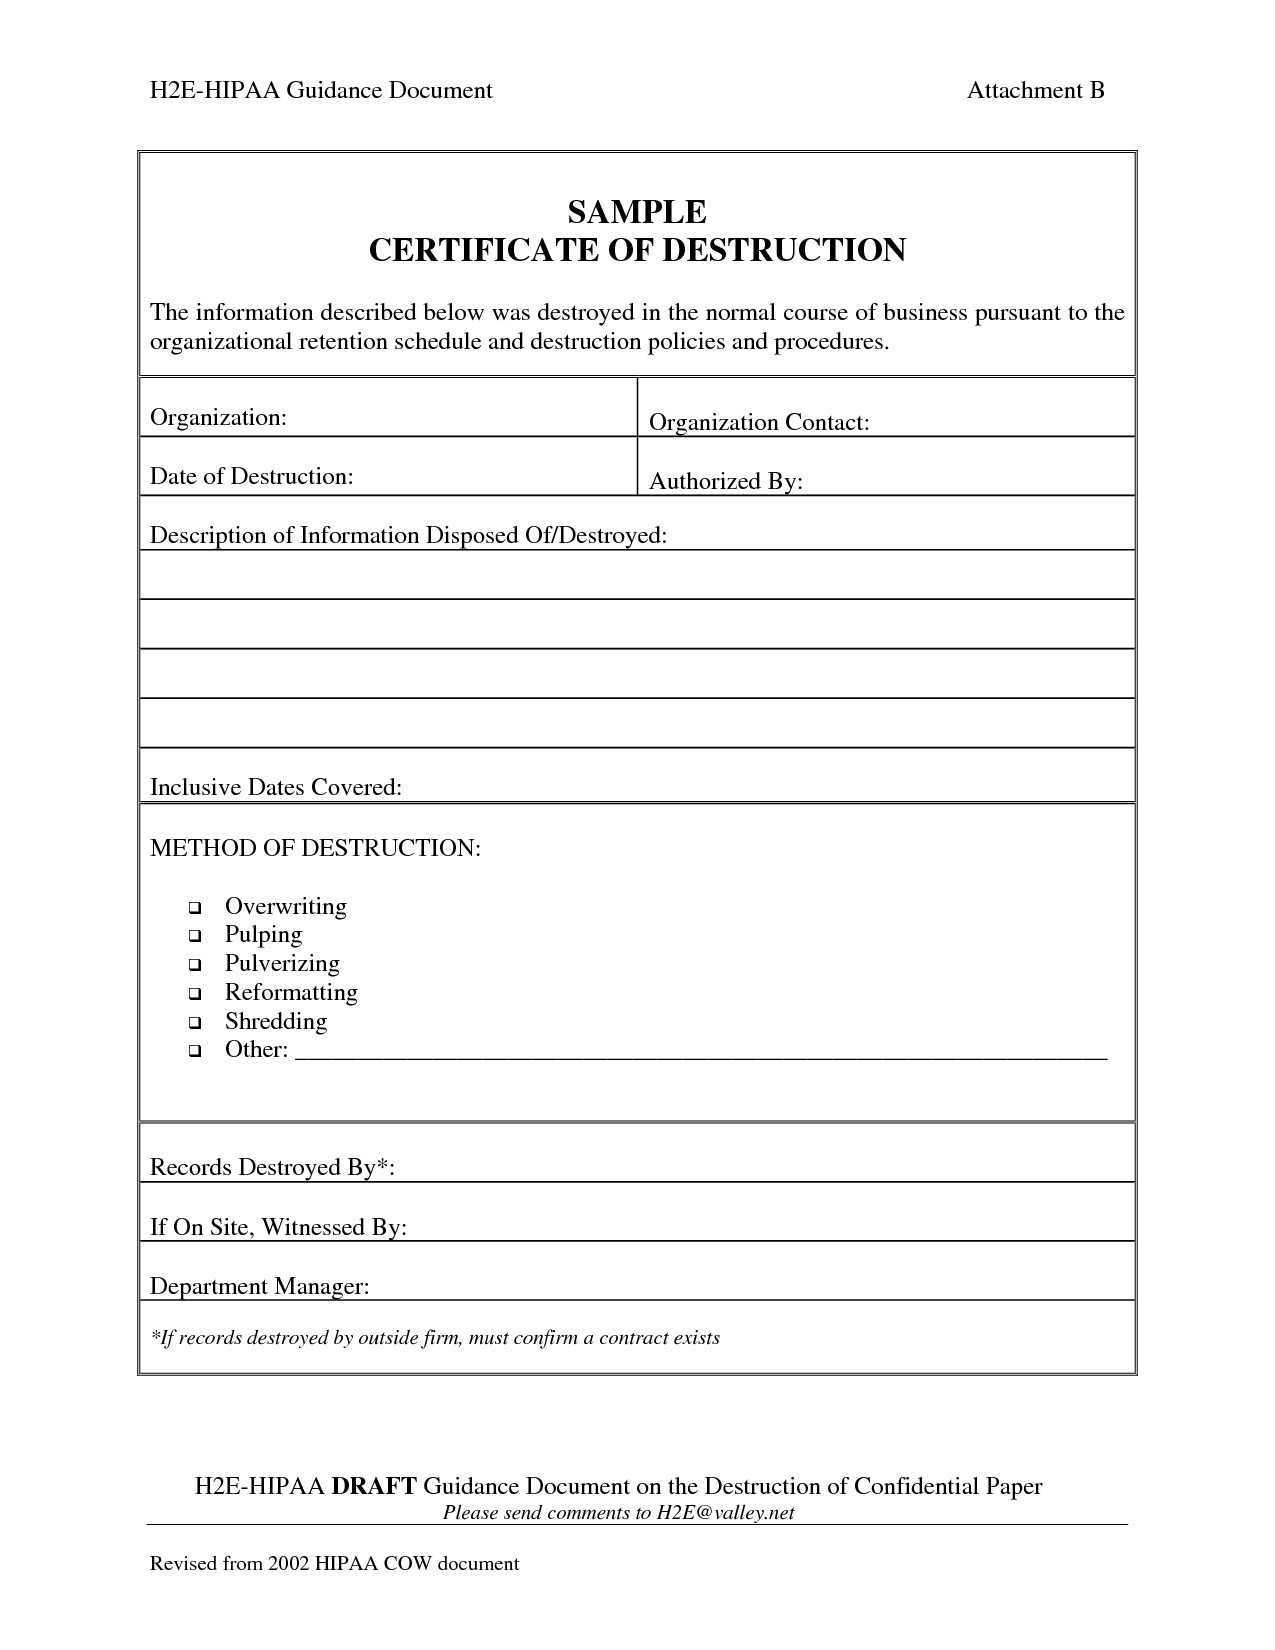 Certificate Of Destruction Template | Anti Grav With Hard Drive Destruction Certificate Template